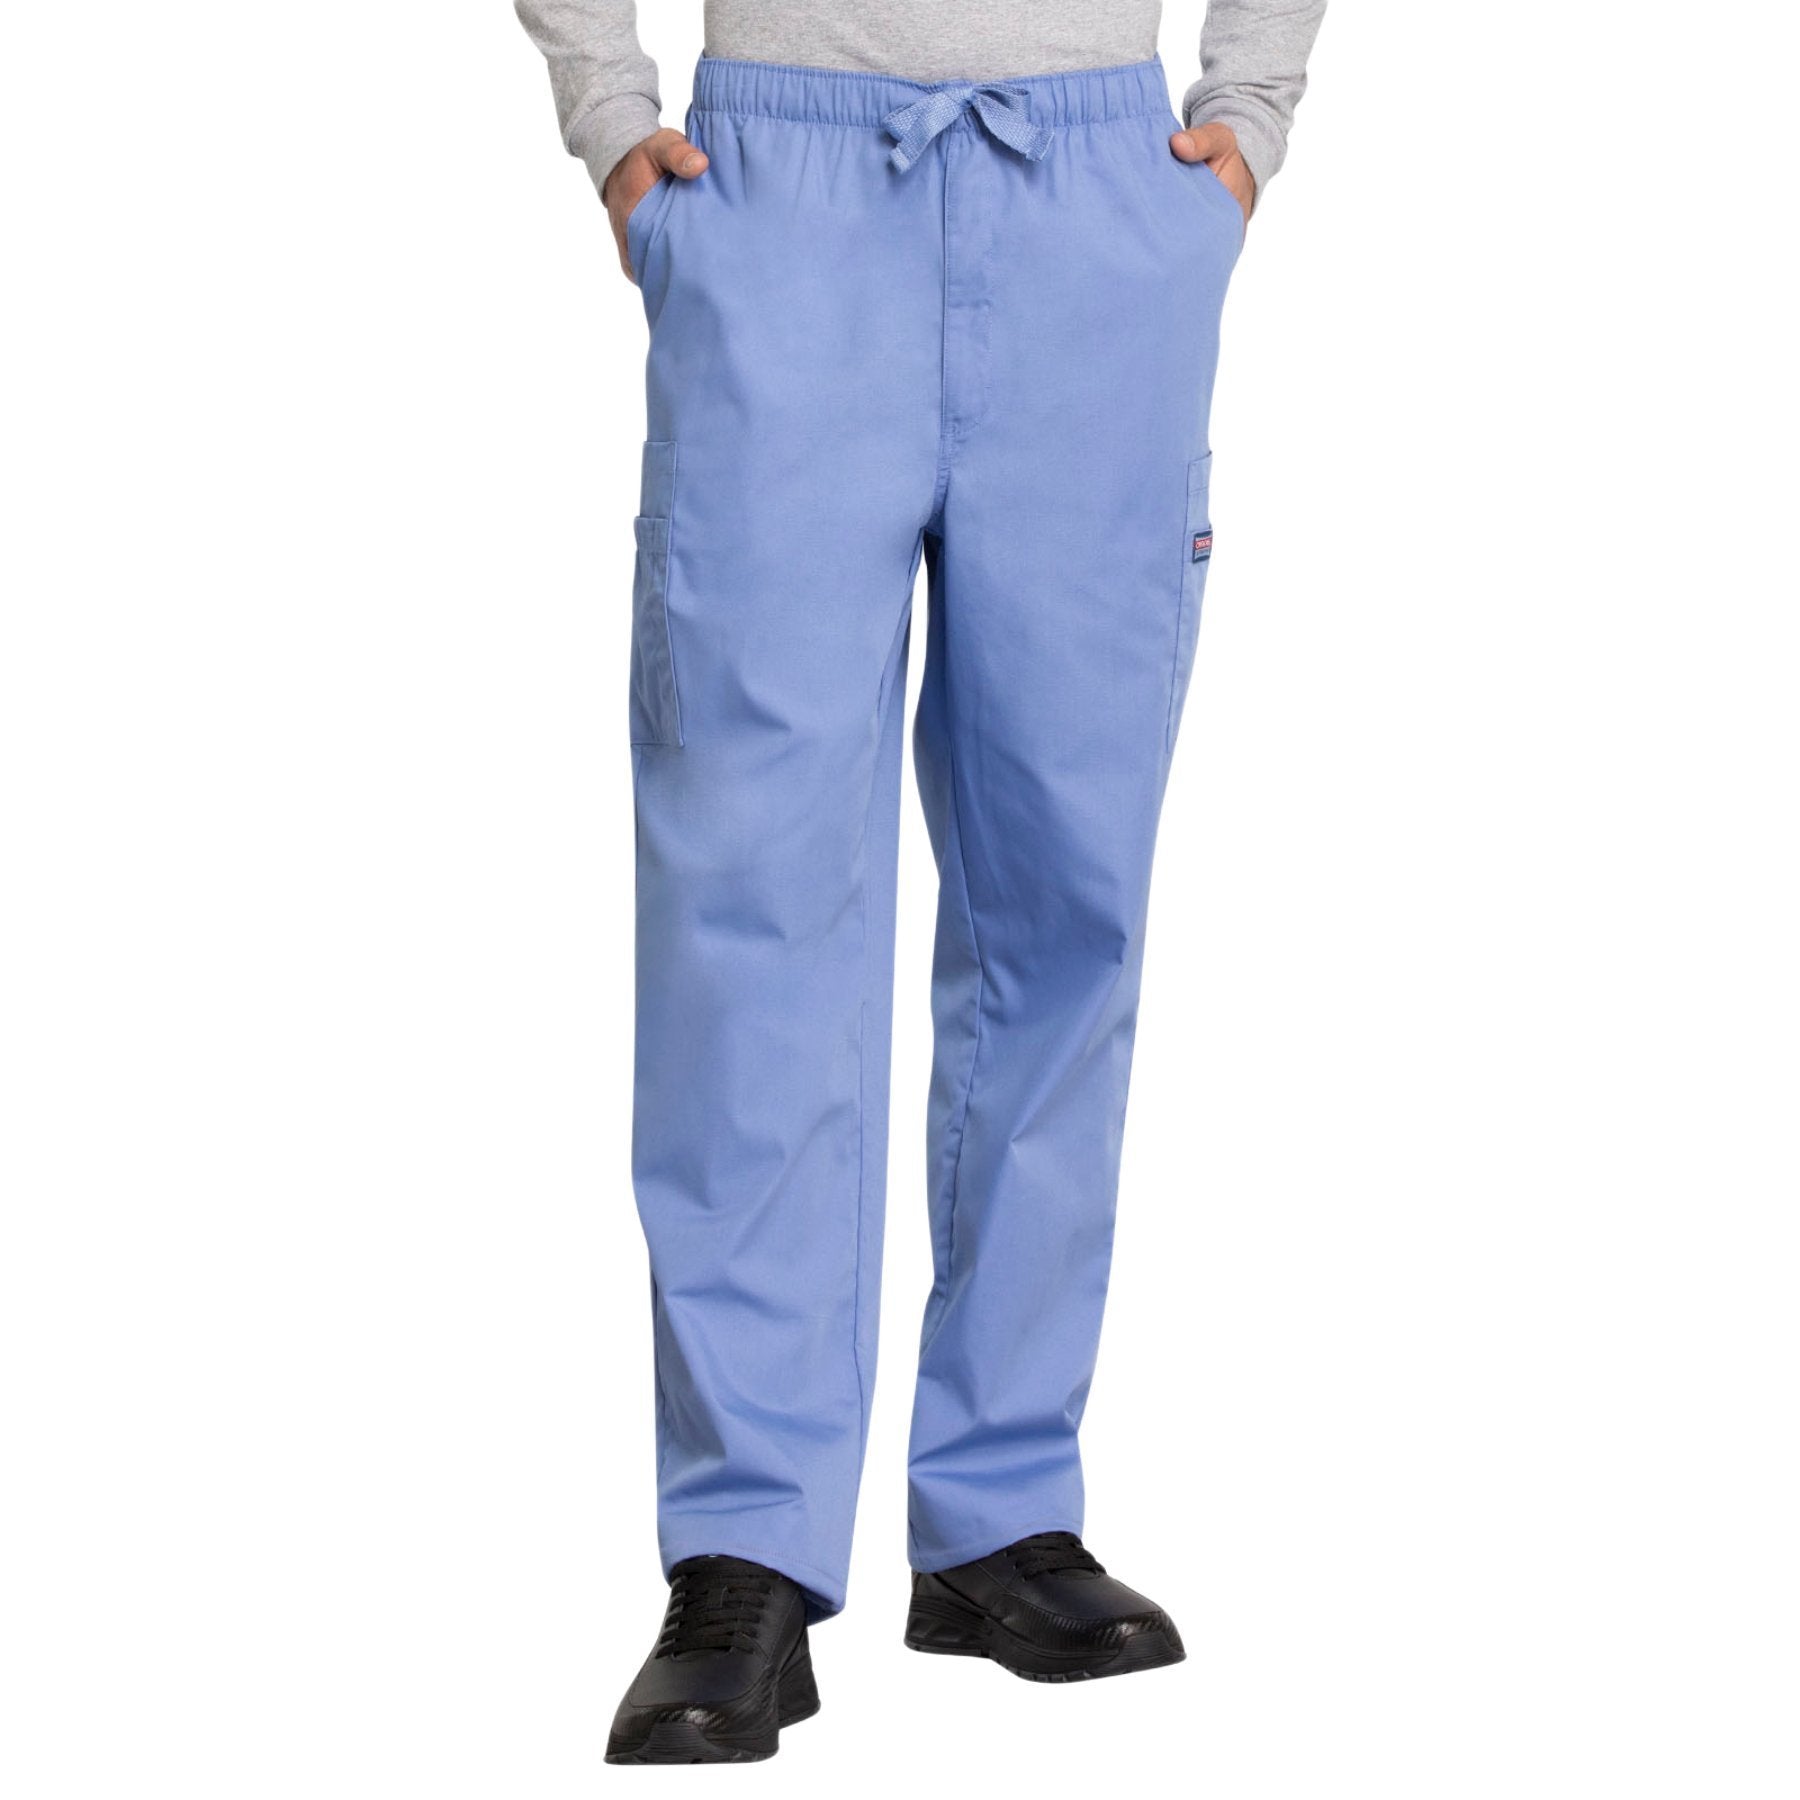 Buy Braintree - Mens 100% Hemp Drawstring Pants Online - Hemp Store